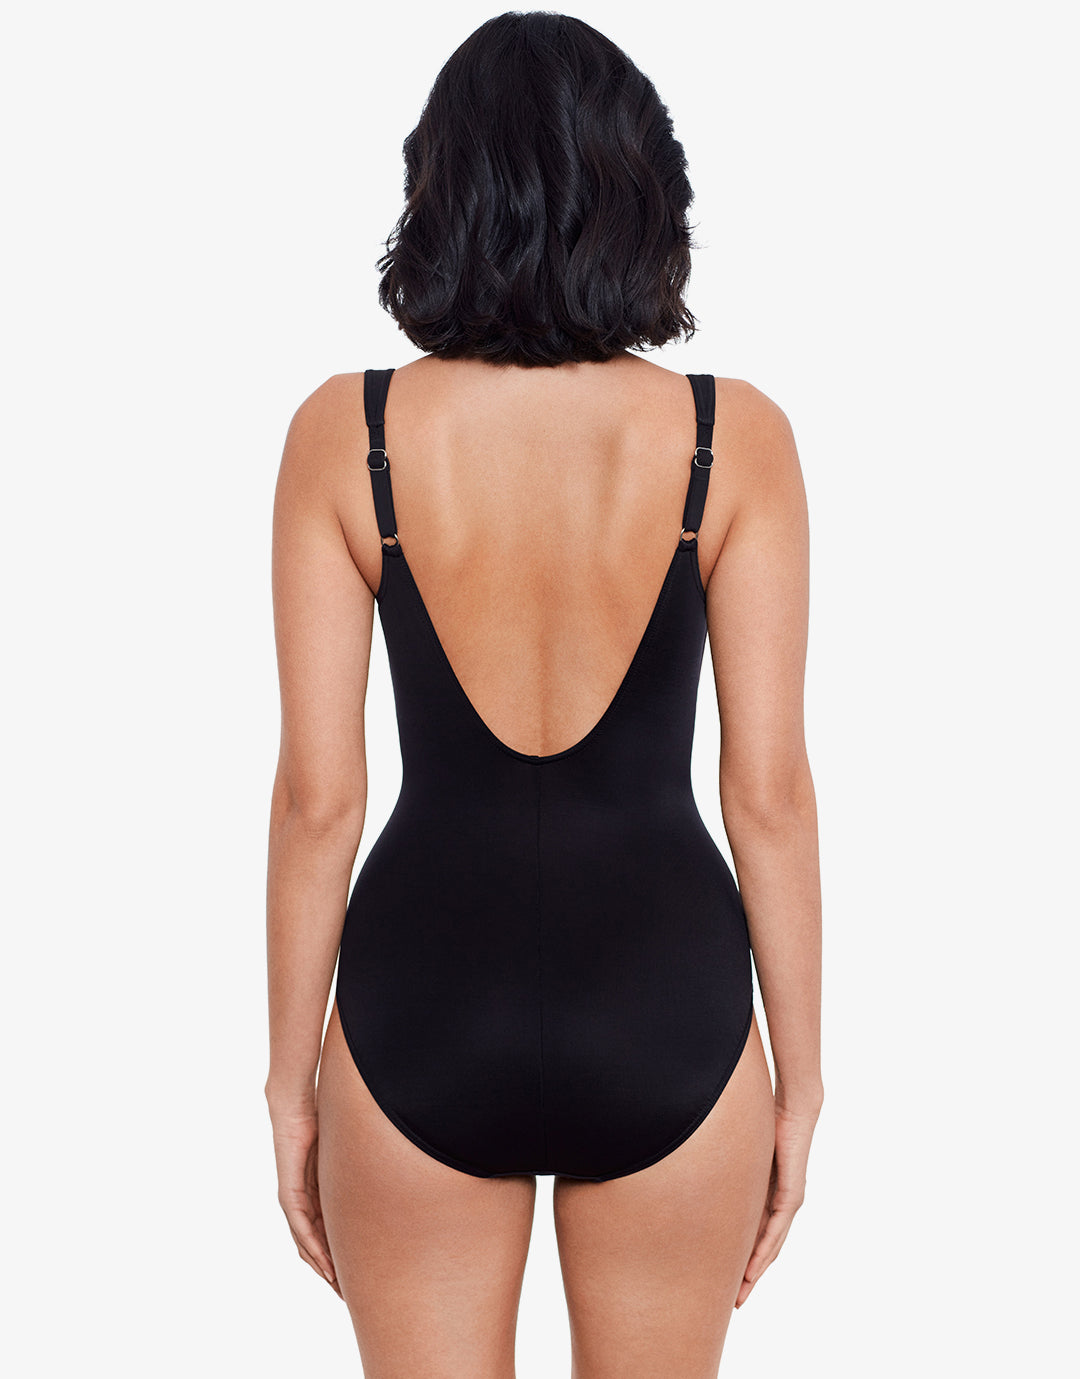 Must Haves Sanibel Swimsuit - Black - Simply Beach UK